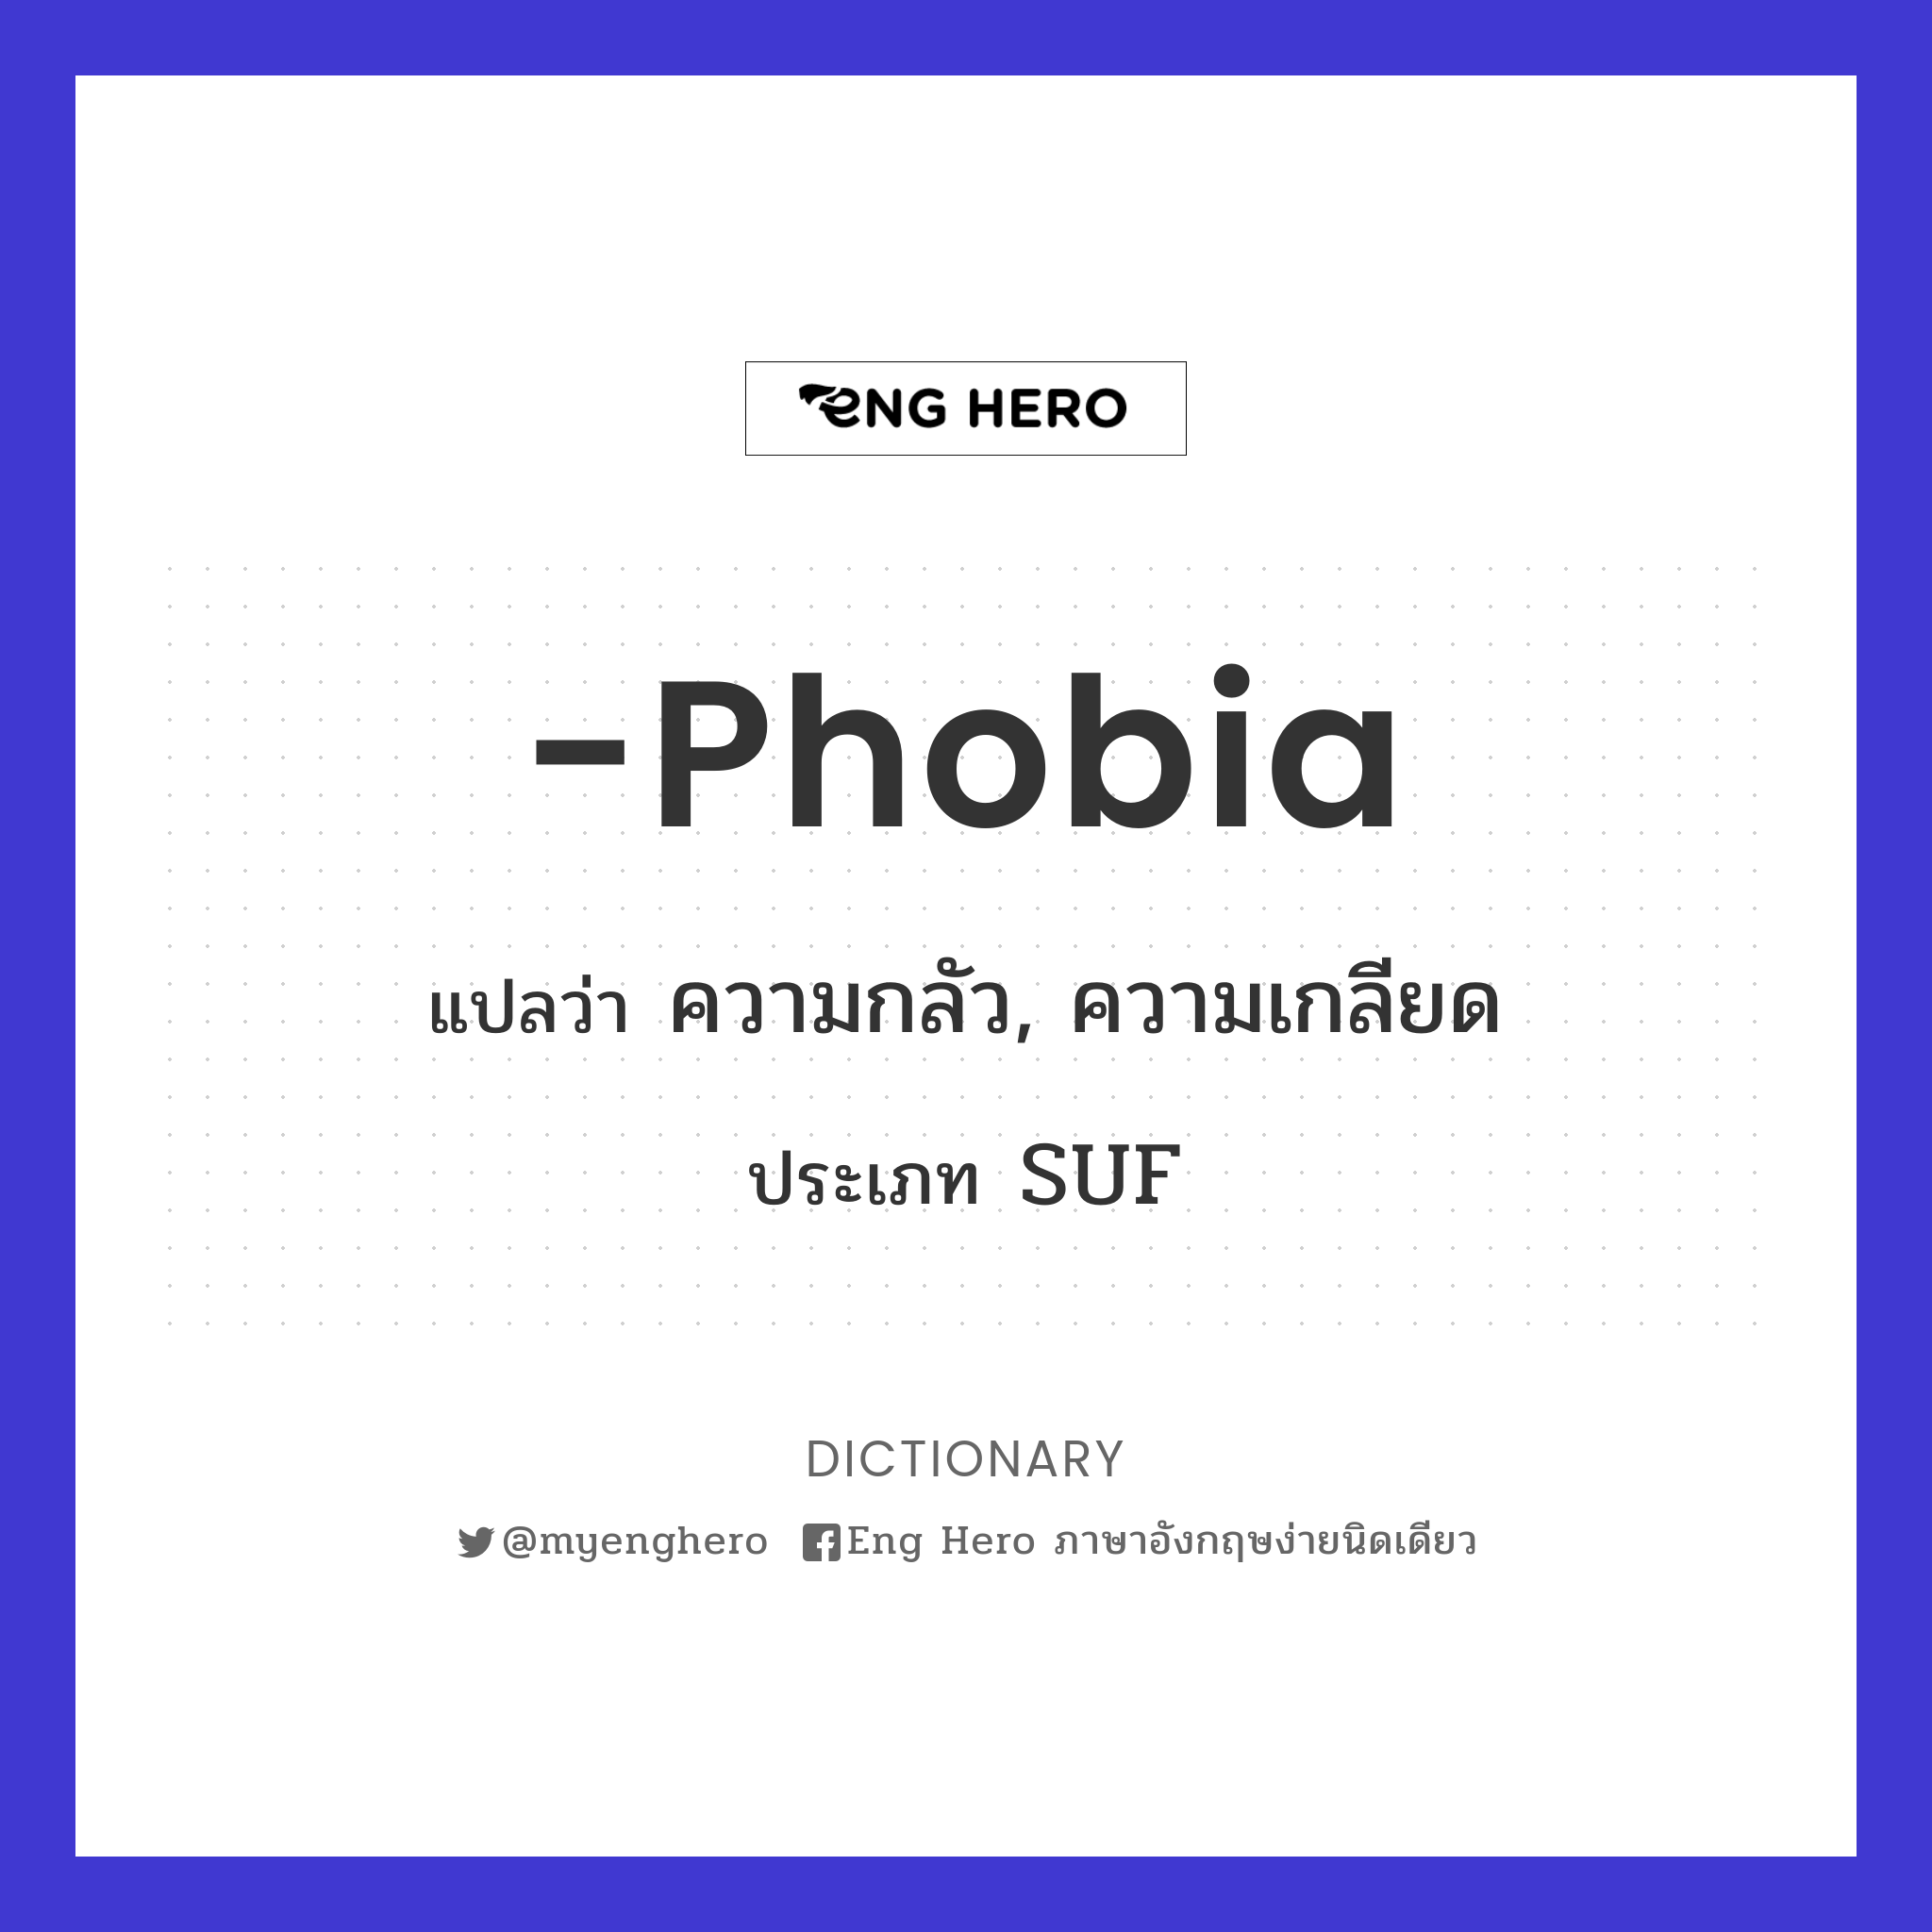 -phobia